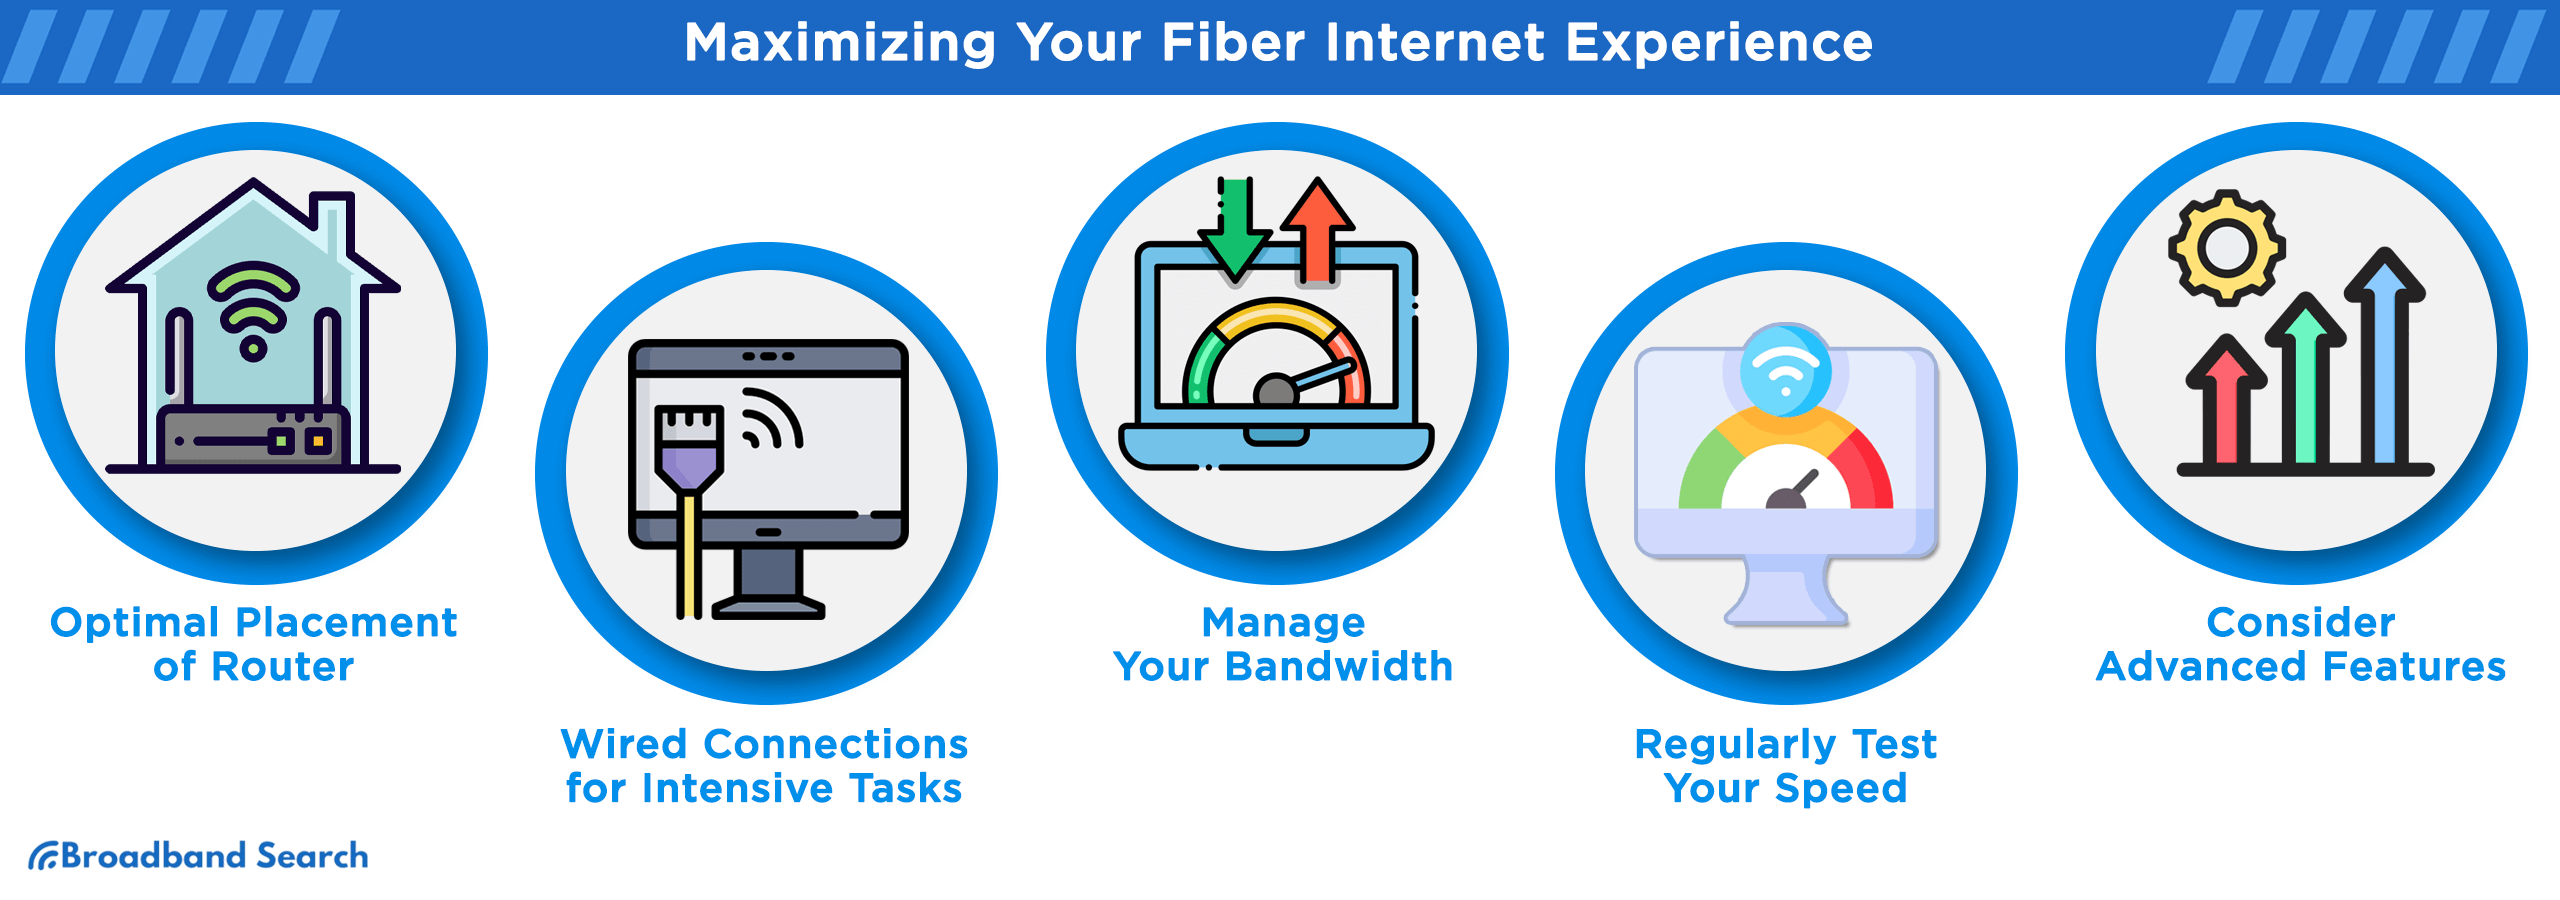 Maximizing your fiber internet experience